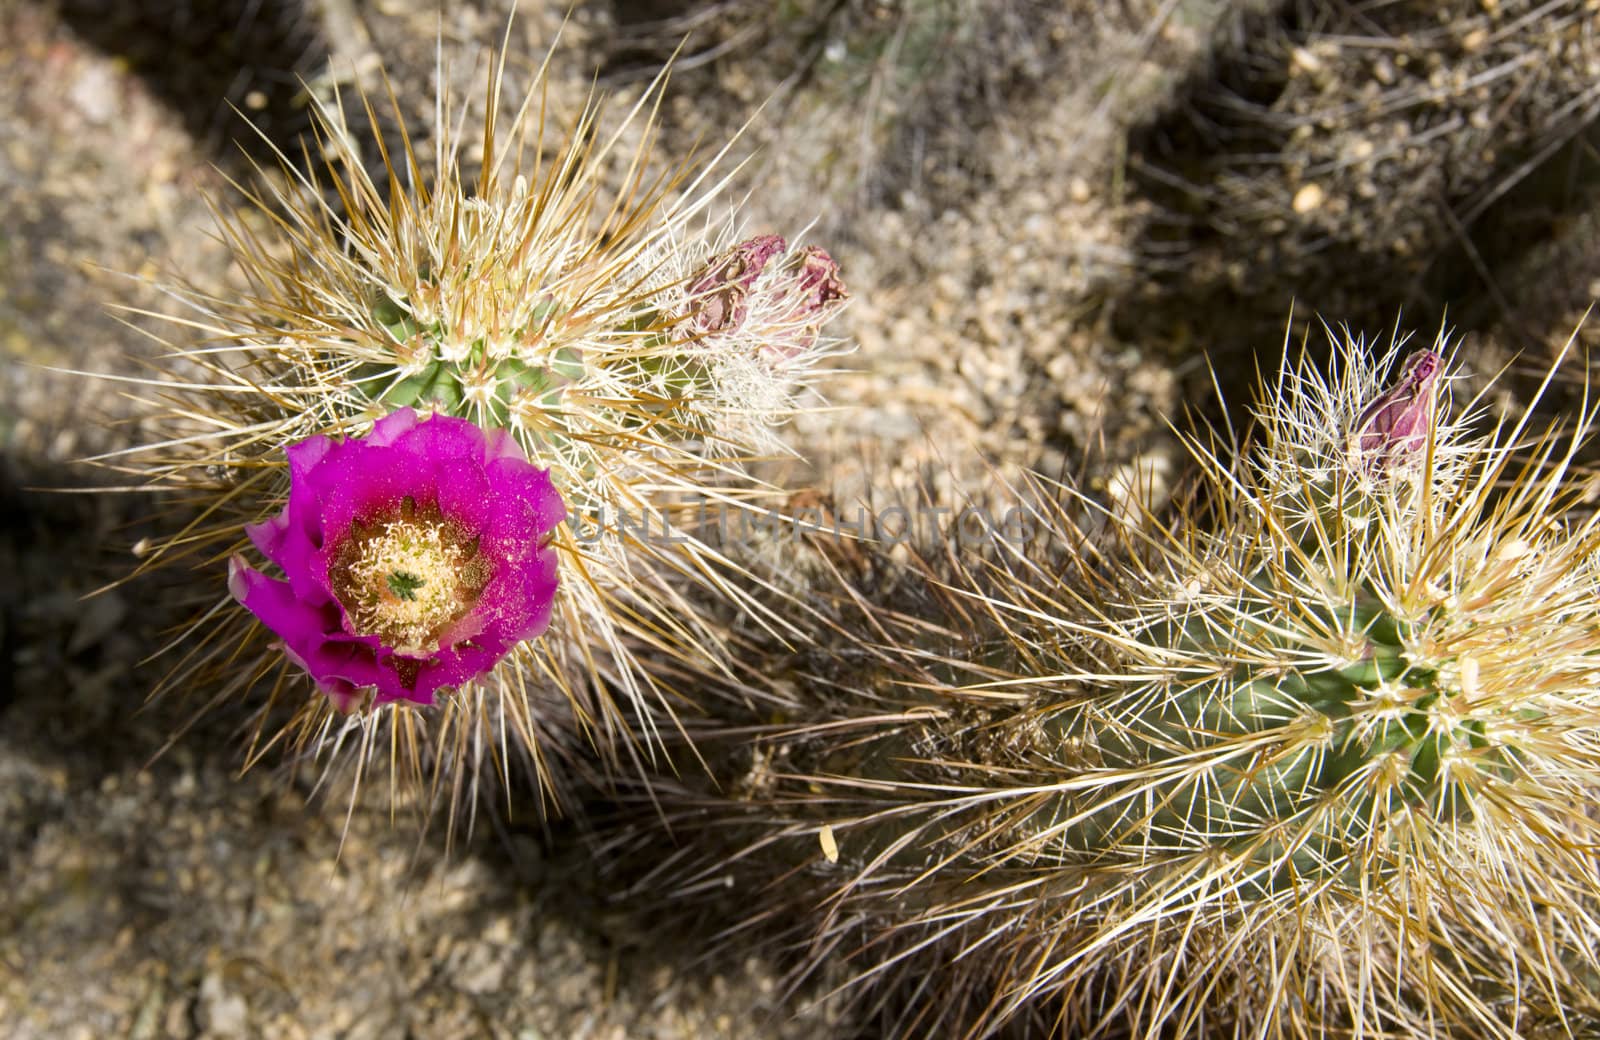 A flowering cactus close up